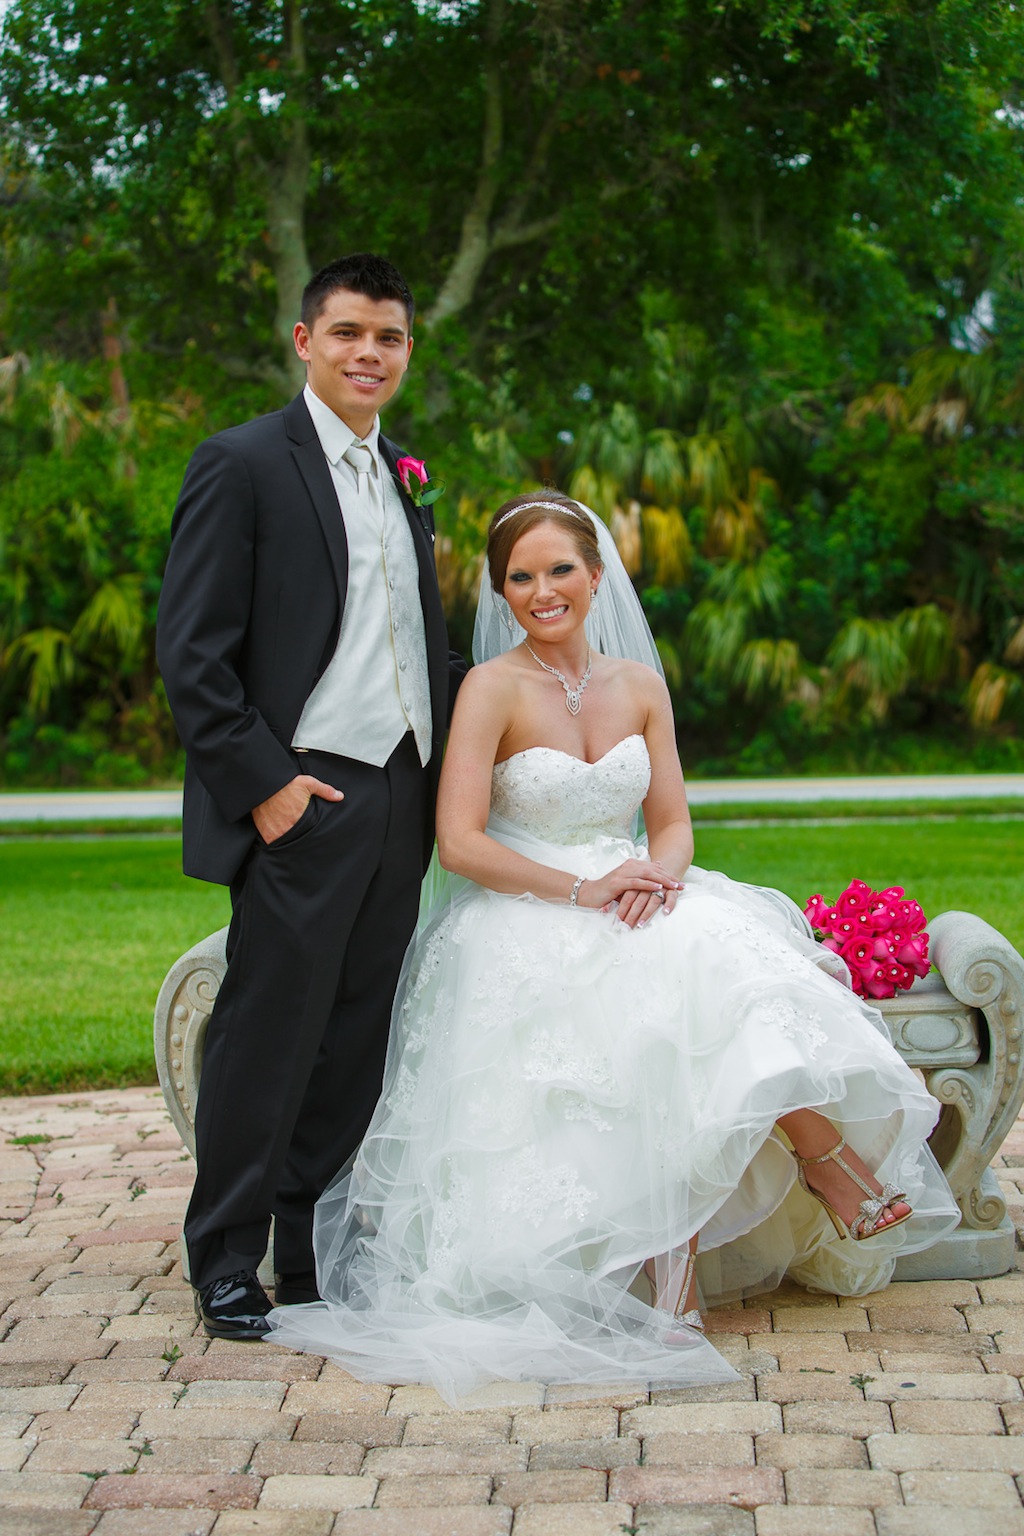 A La Carte Pavilion Wedding - Pink Bling Tampa Wedding - Tampa Wedding Photographer Aaron Lockwood Photography (25)